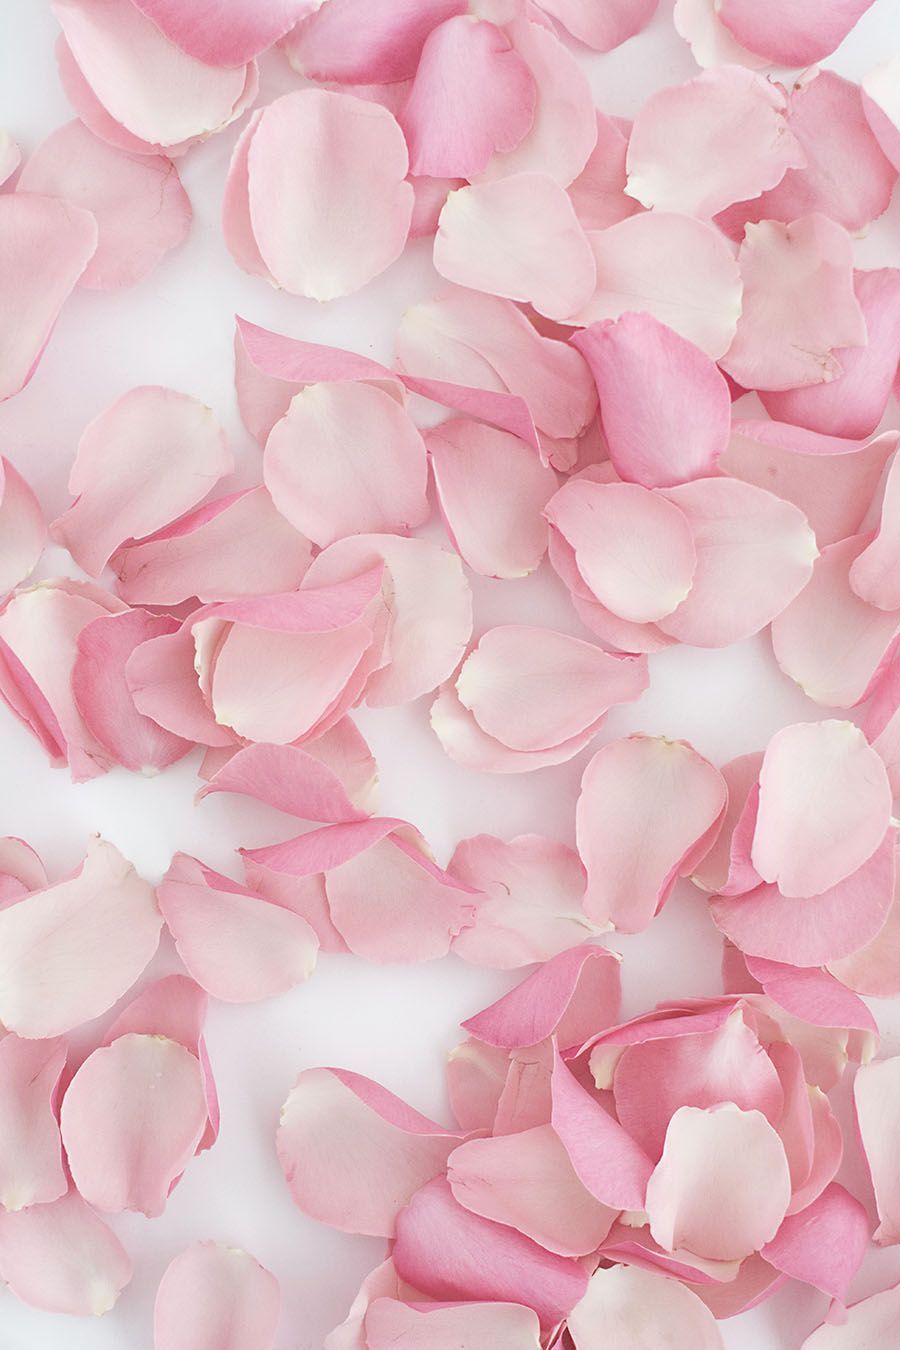 Rose Petals Wallpapers